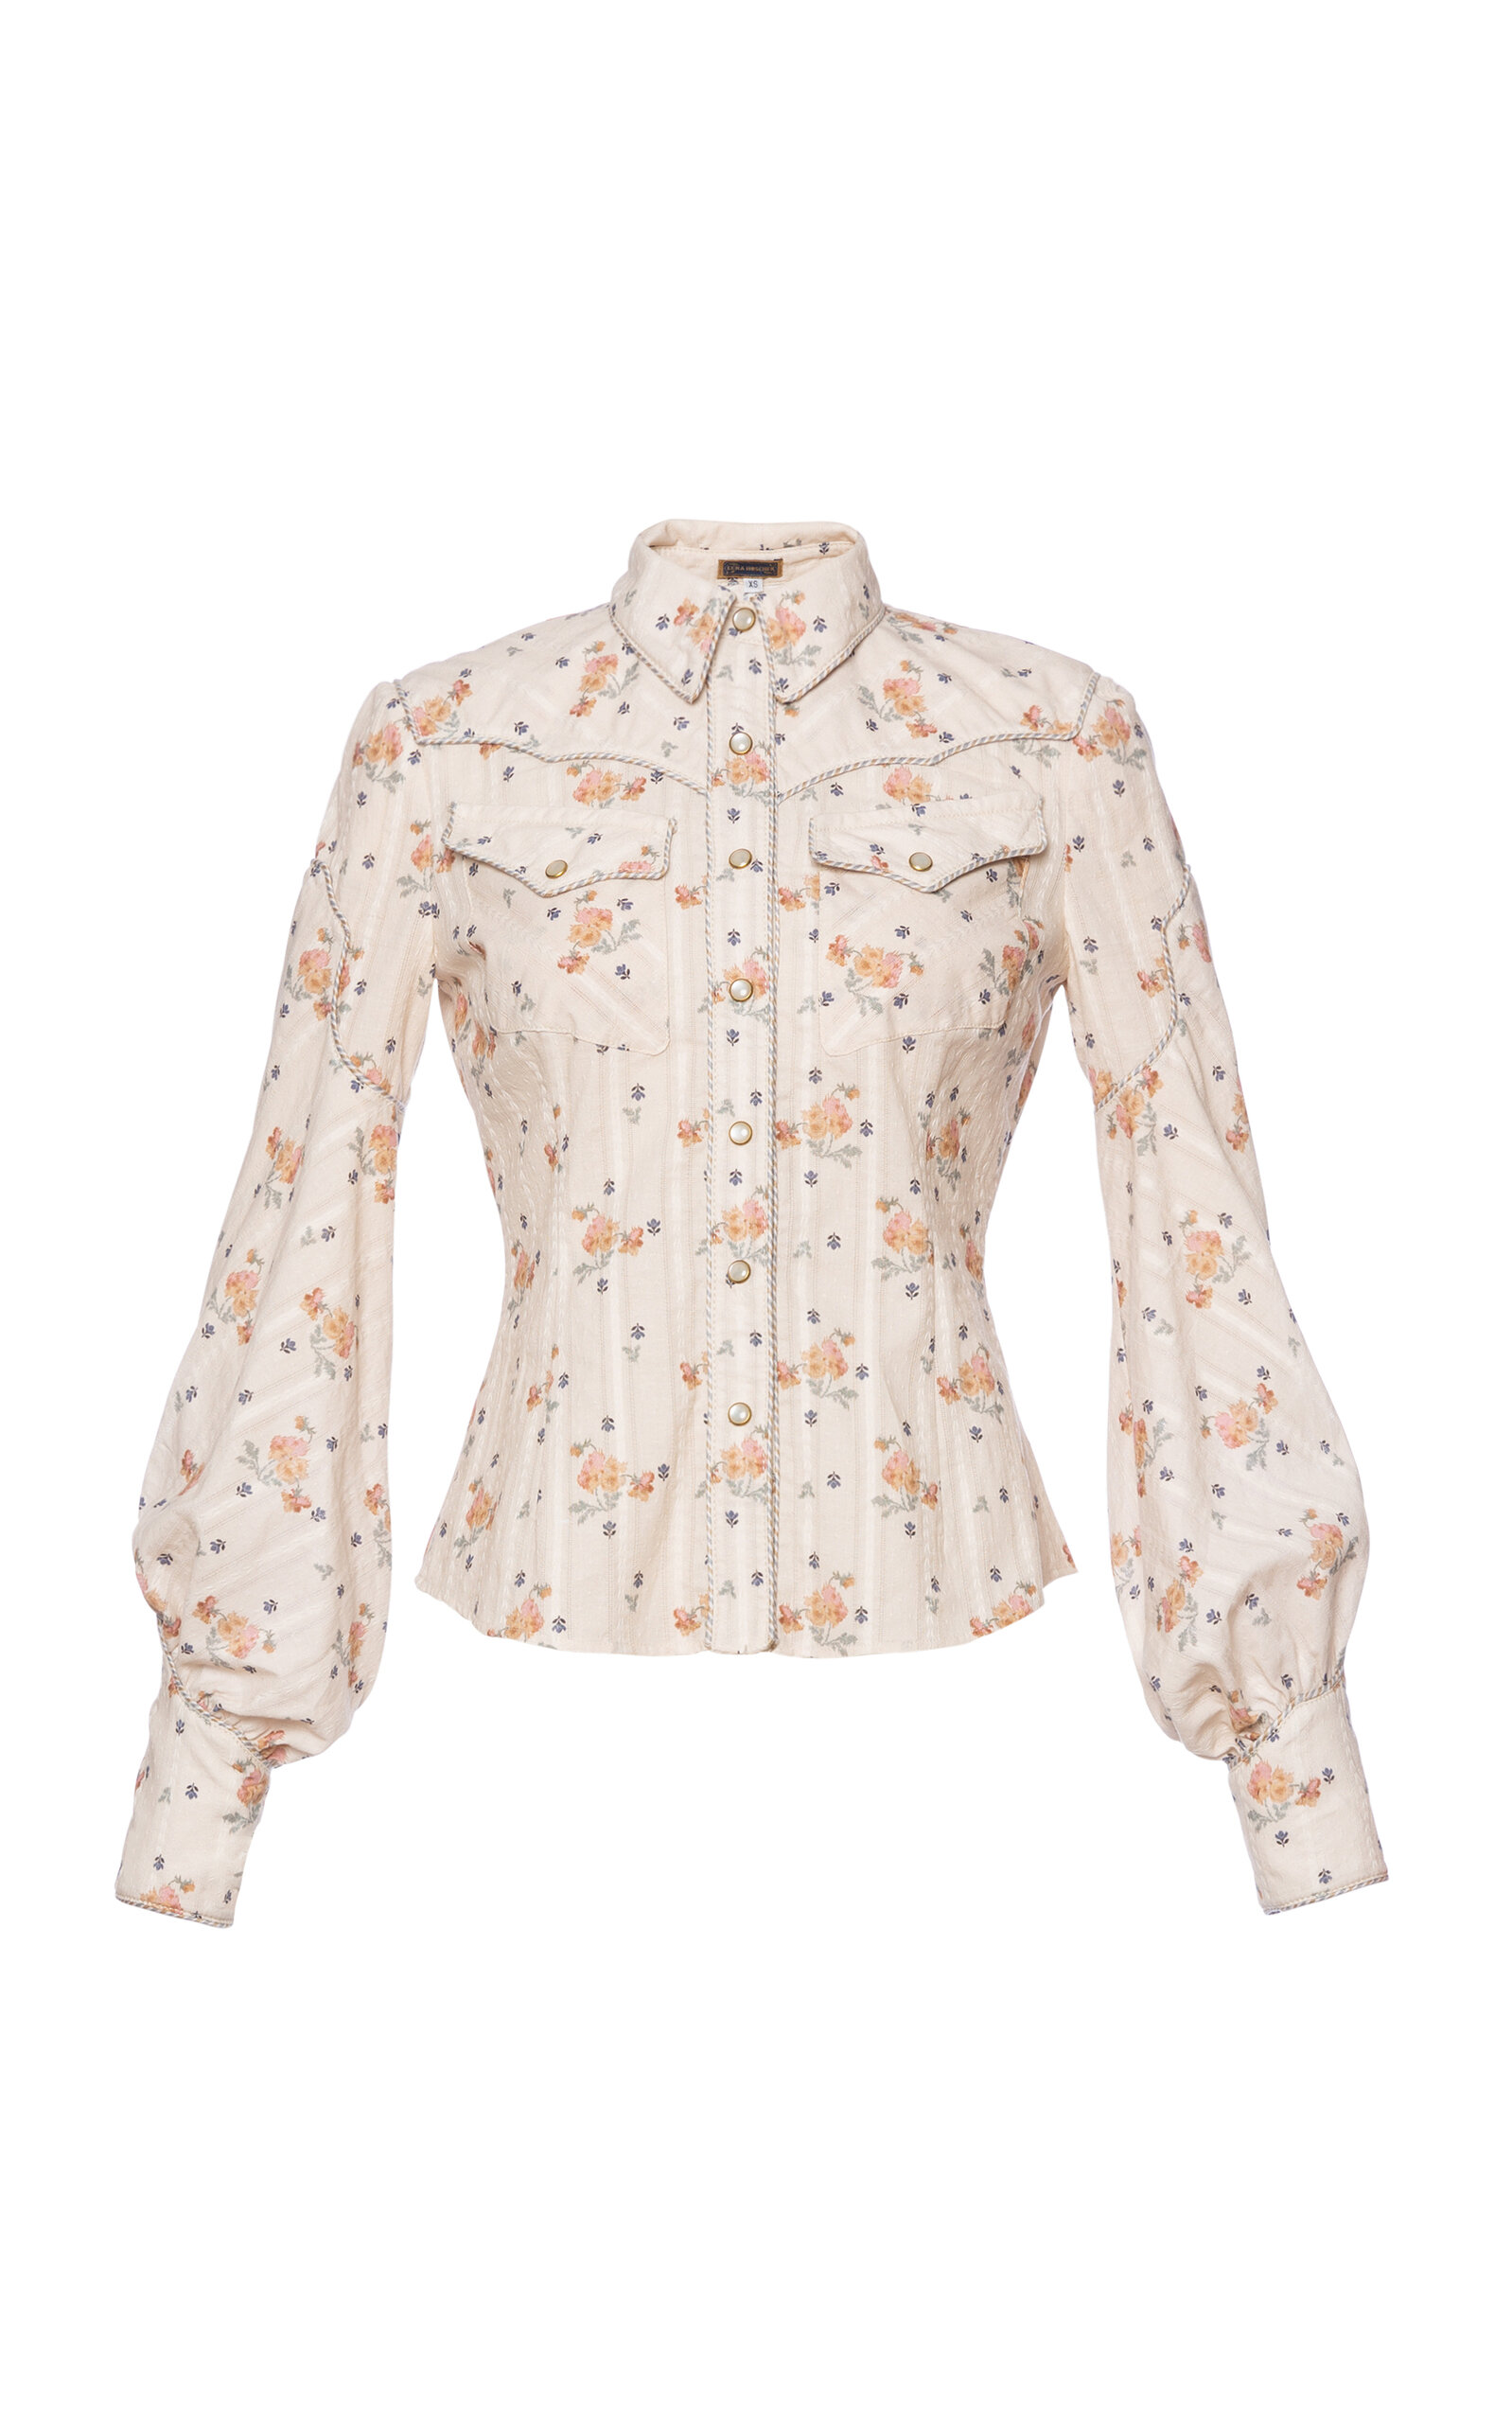 Lena Hoschek Women's Dallas Cotton Button-down Shirt In Floral